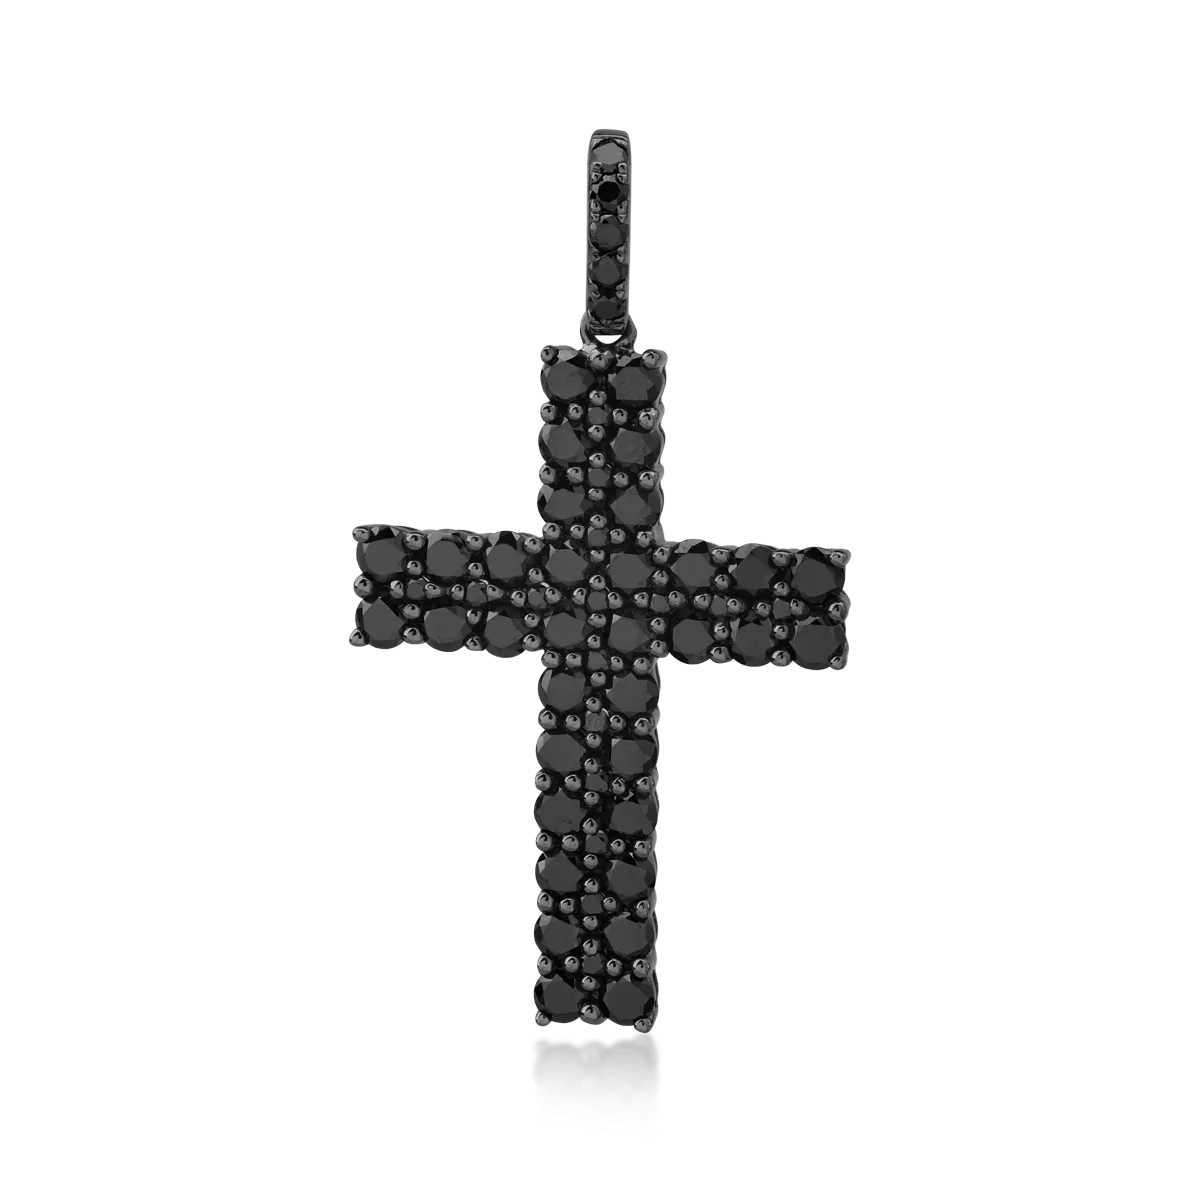 18K black gold cross pendant with black diamonds of 1.89ct